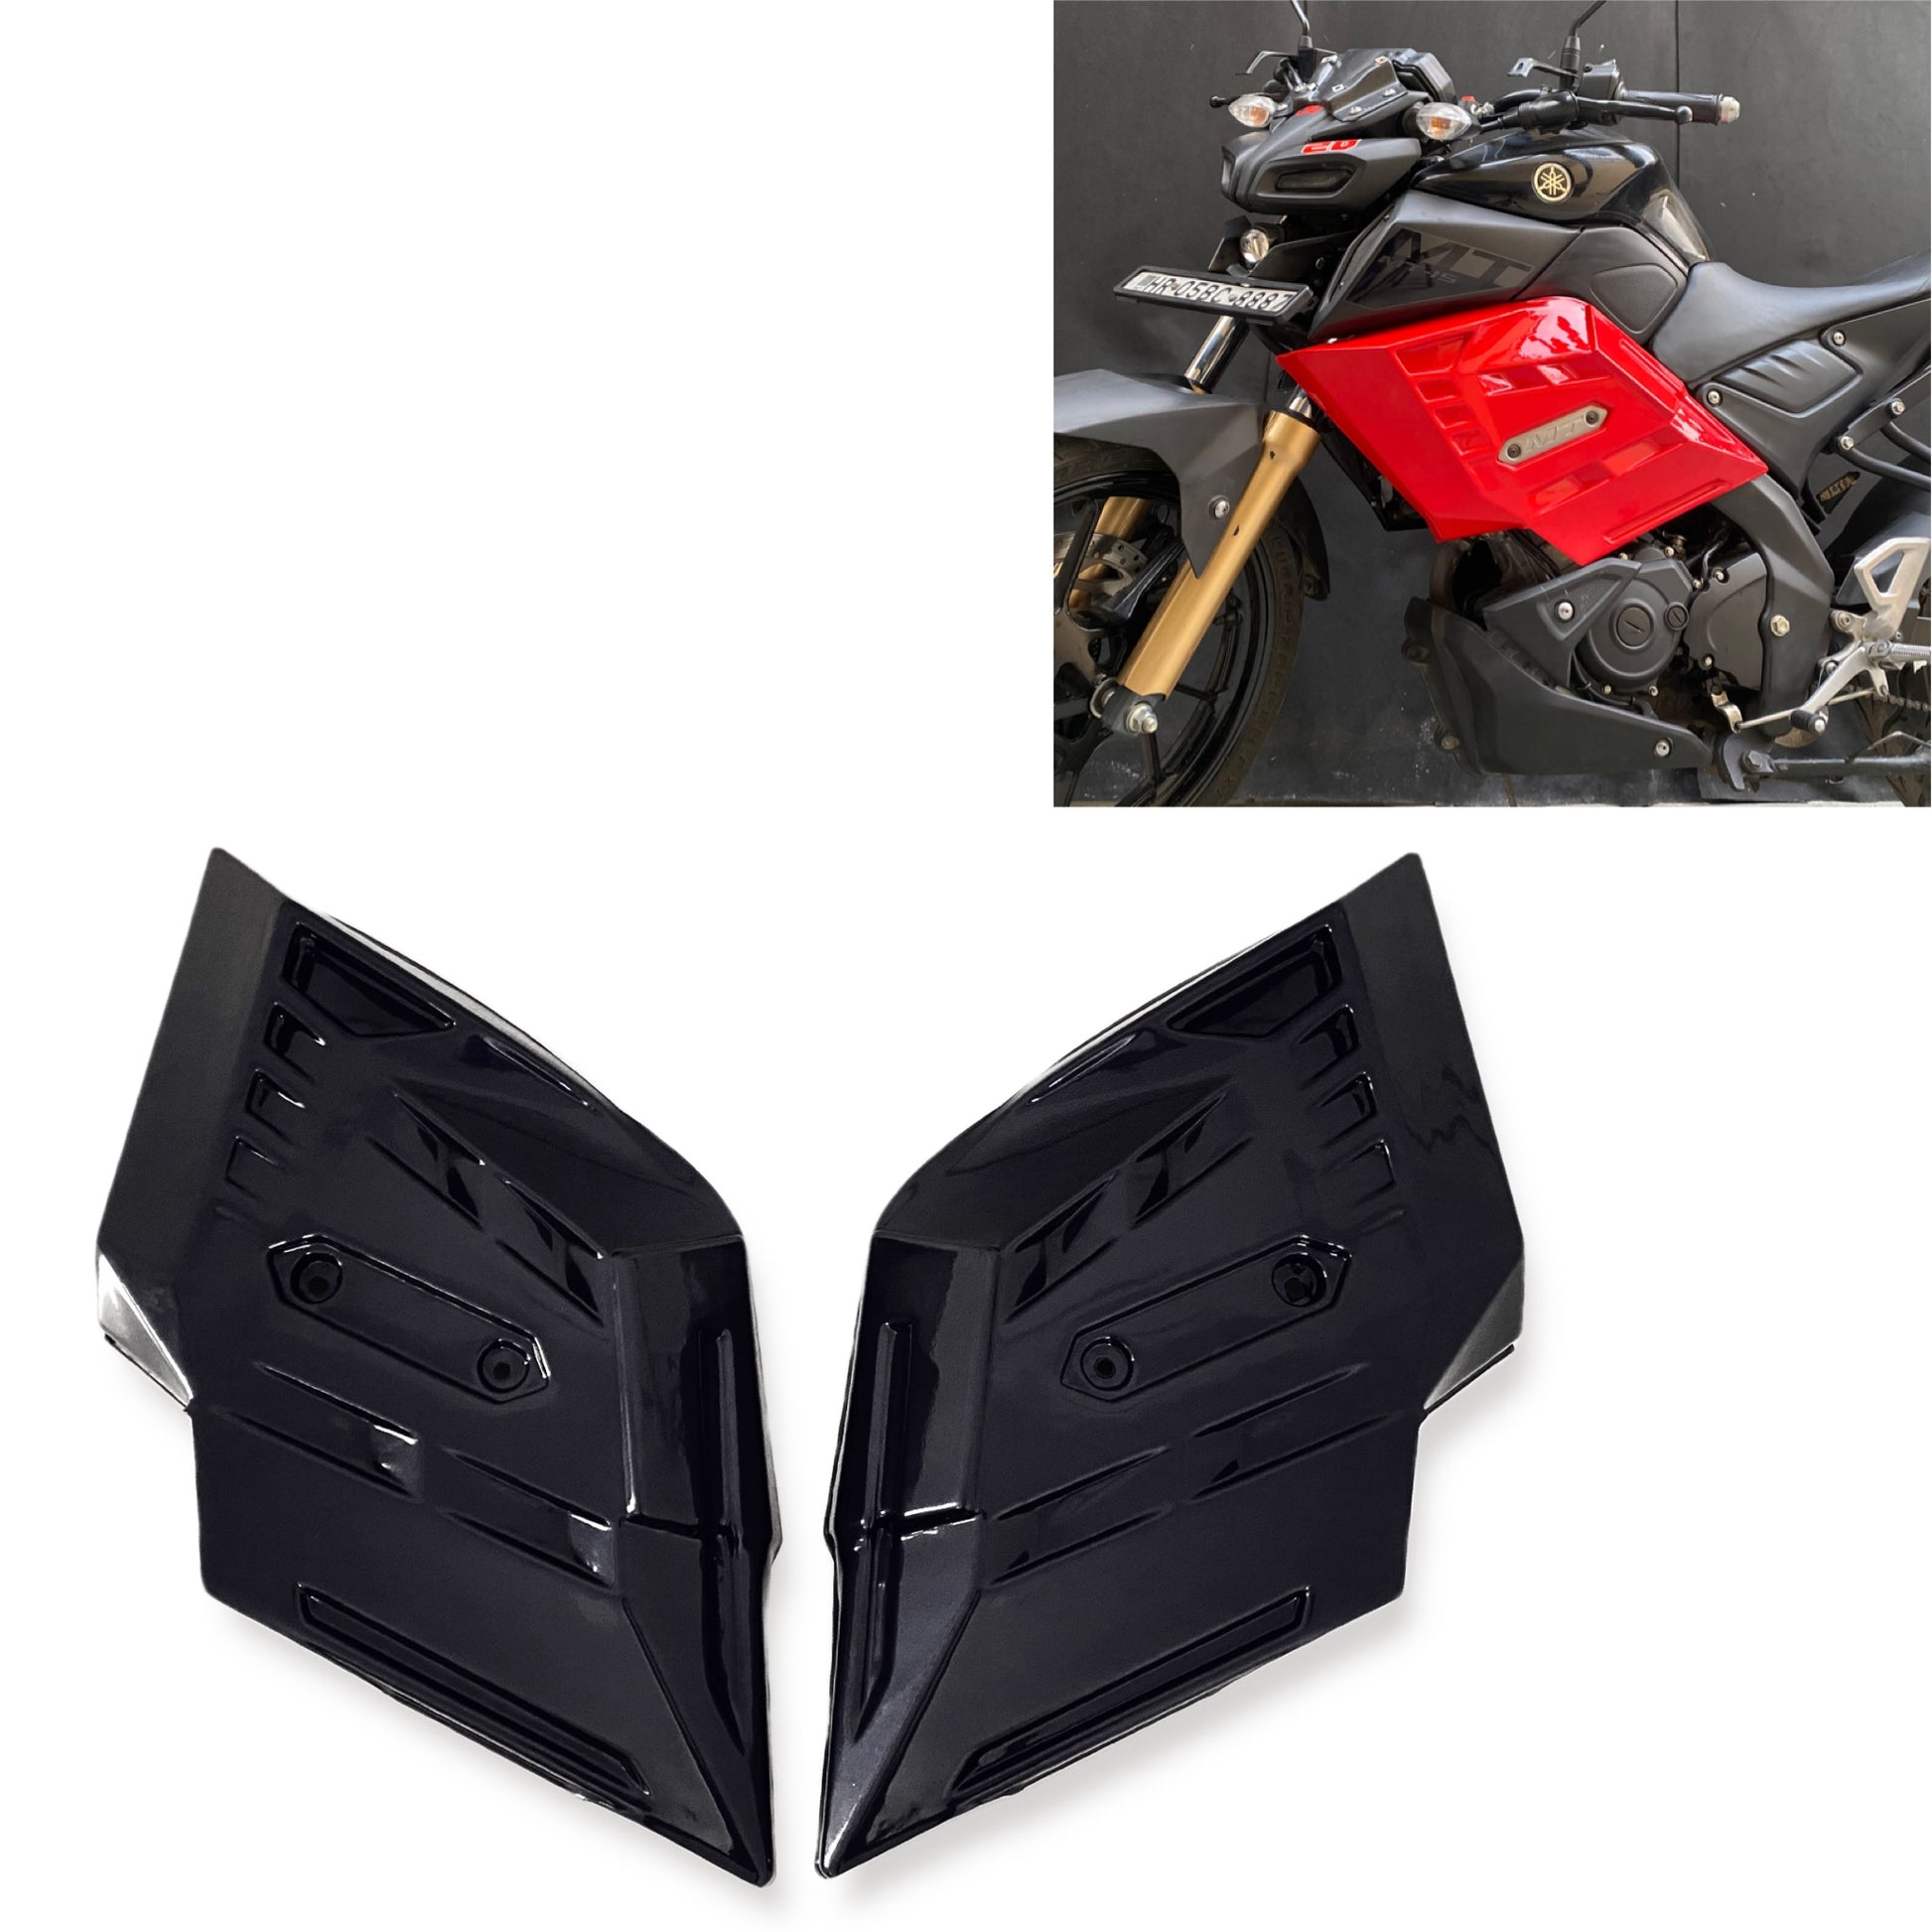 Yamaha MT15 Accessories | Modified Yamaha MT 15 | Best MT15 Modification | Engine Cover Side Panel for Yamaha MT15 | Saiga Parts for MT15 V1 / V2